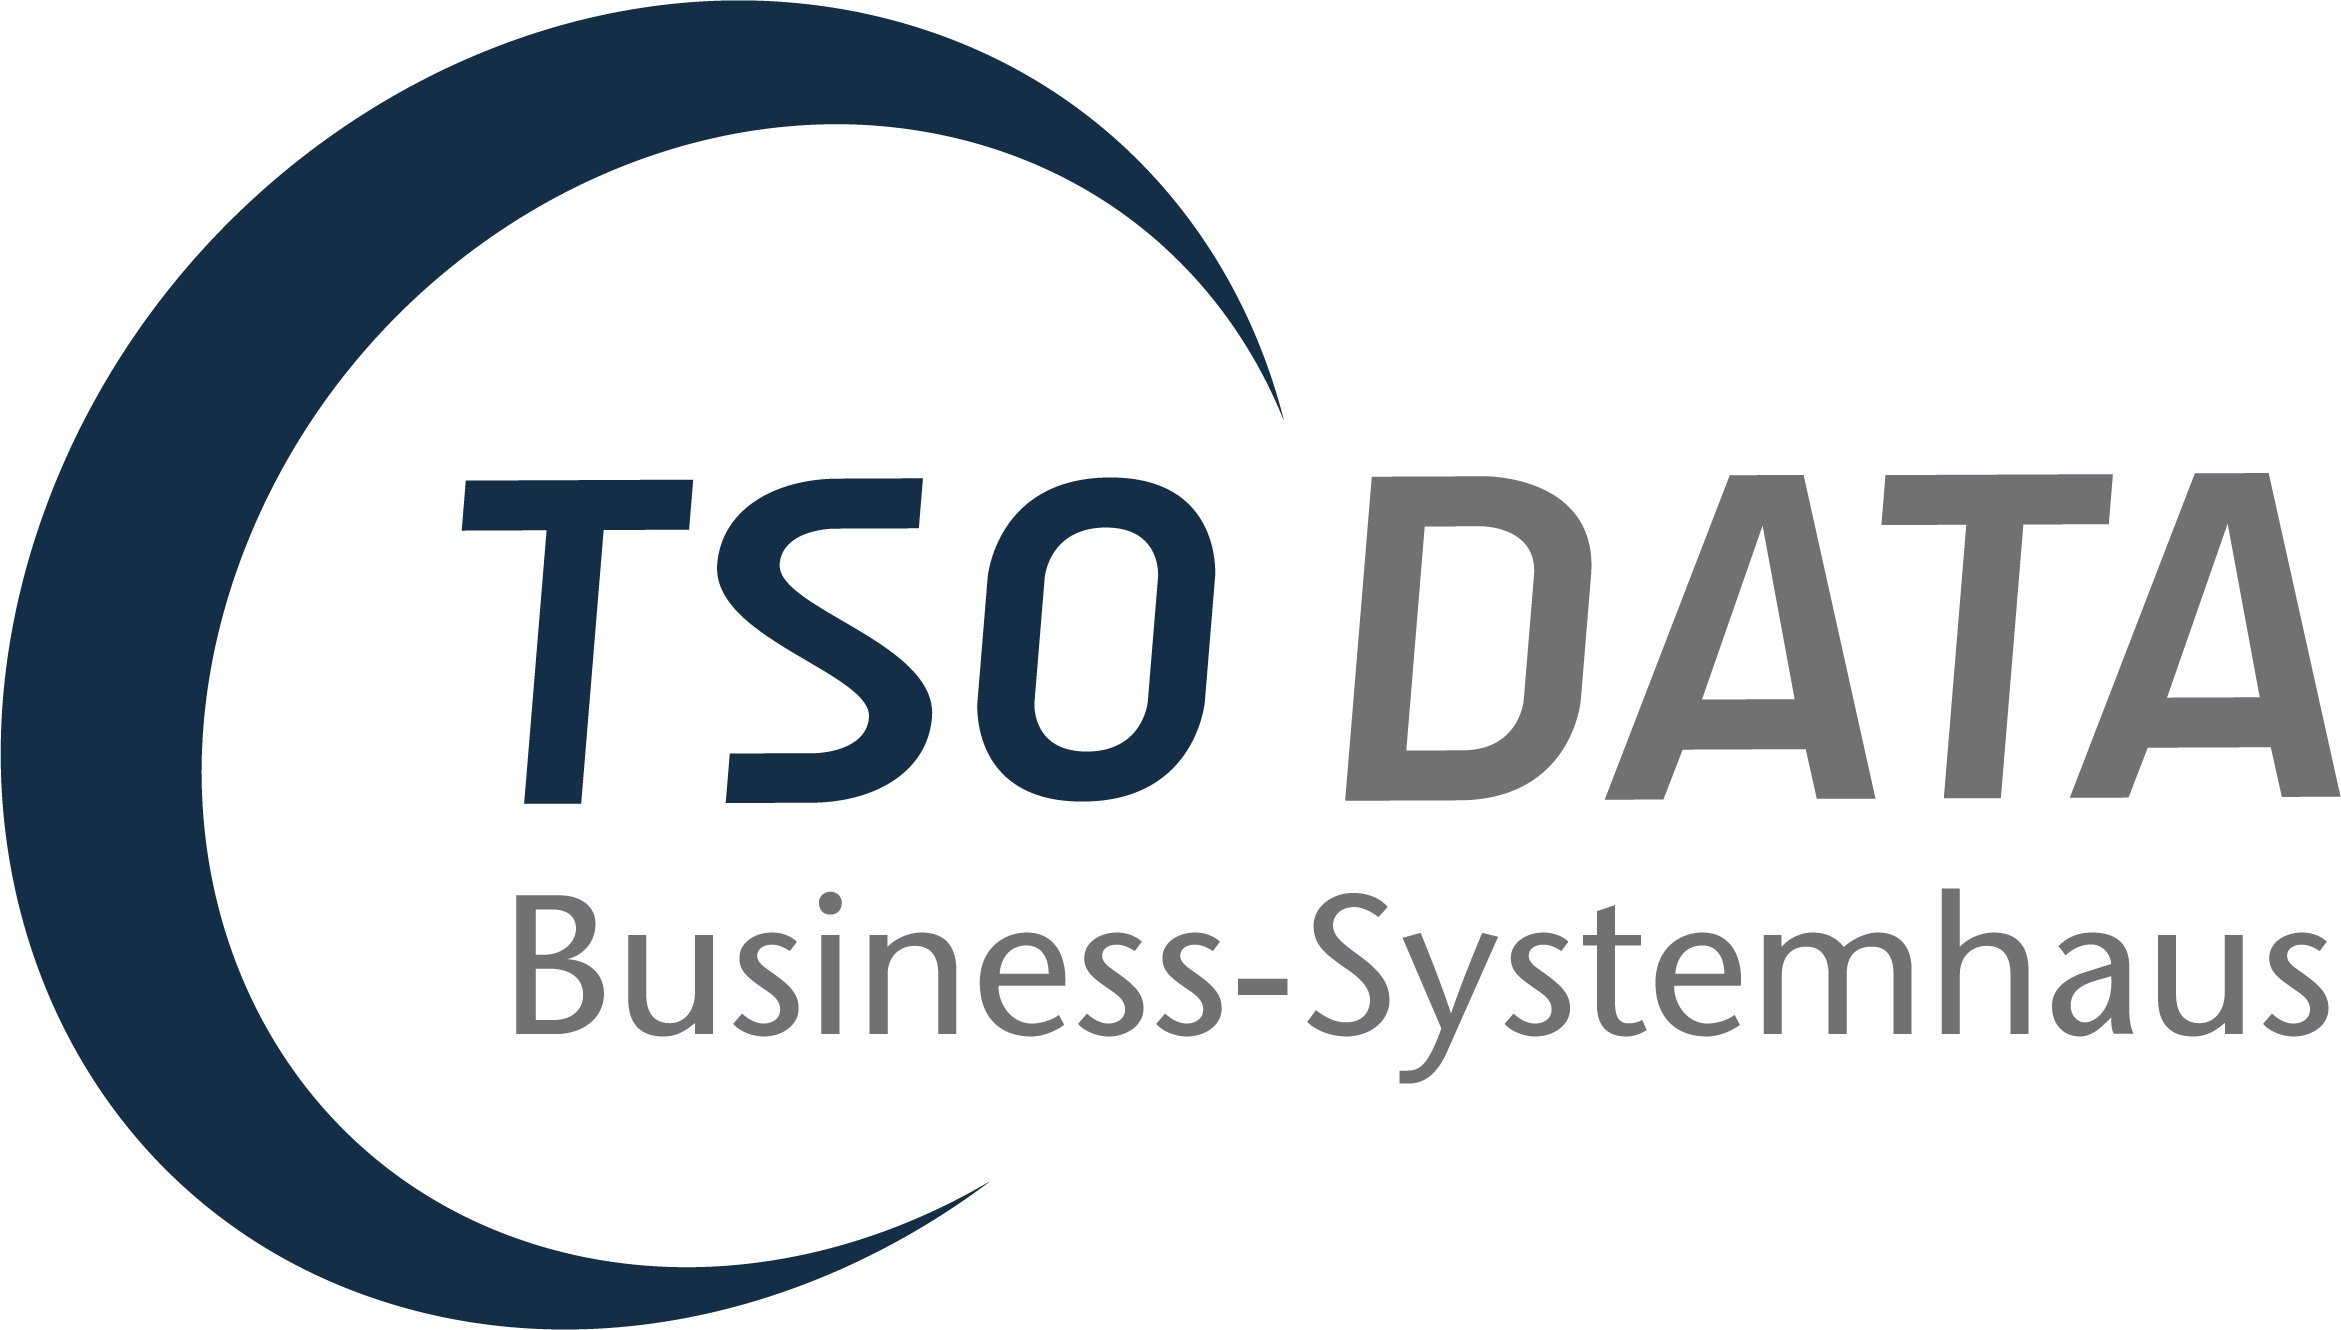 TSODATA partner logo